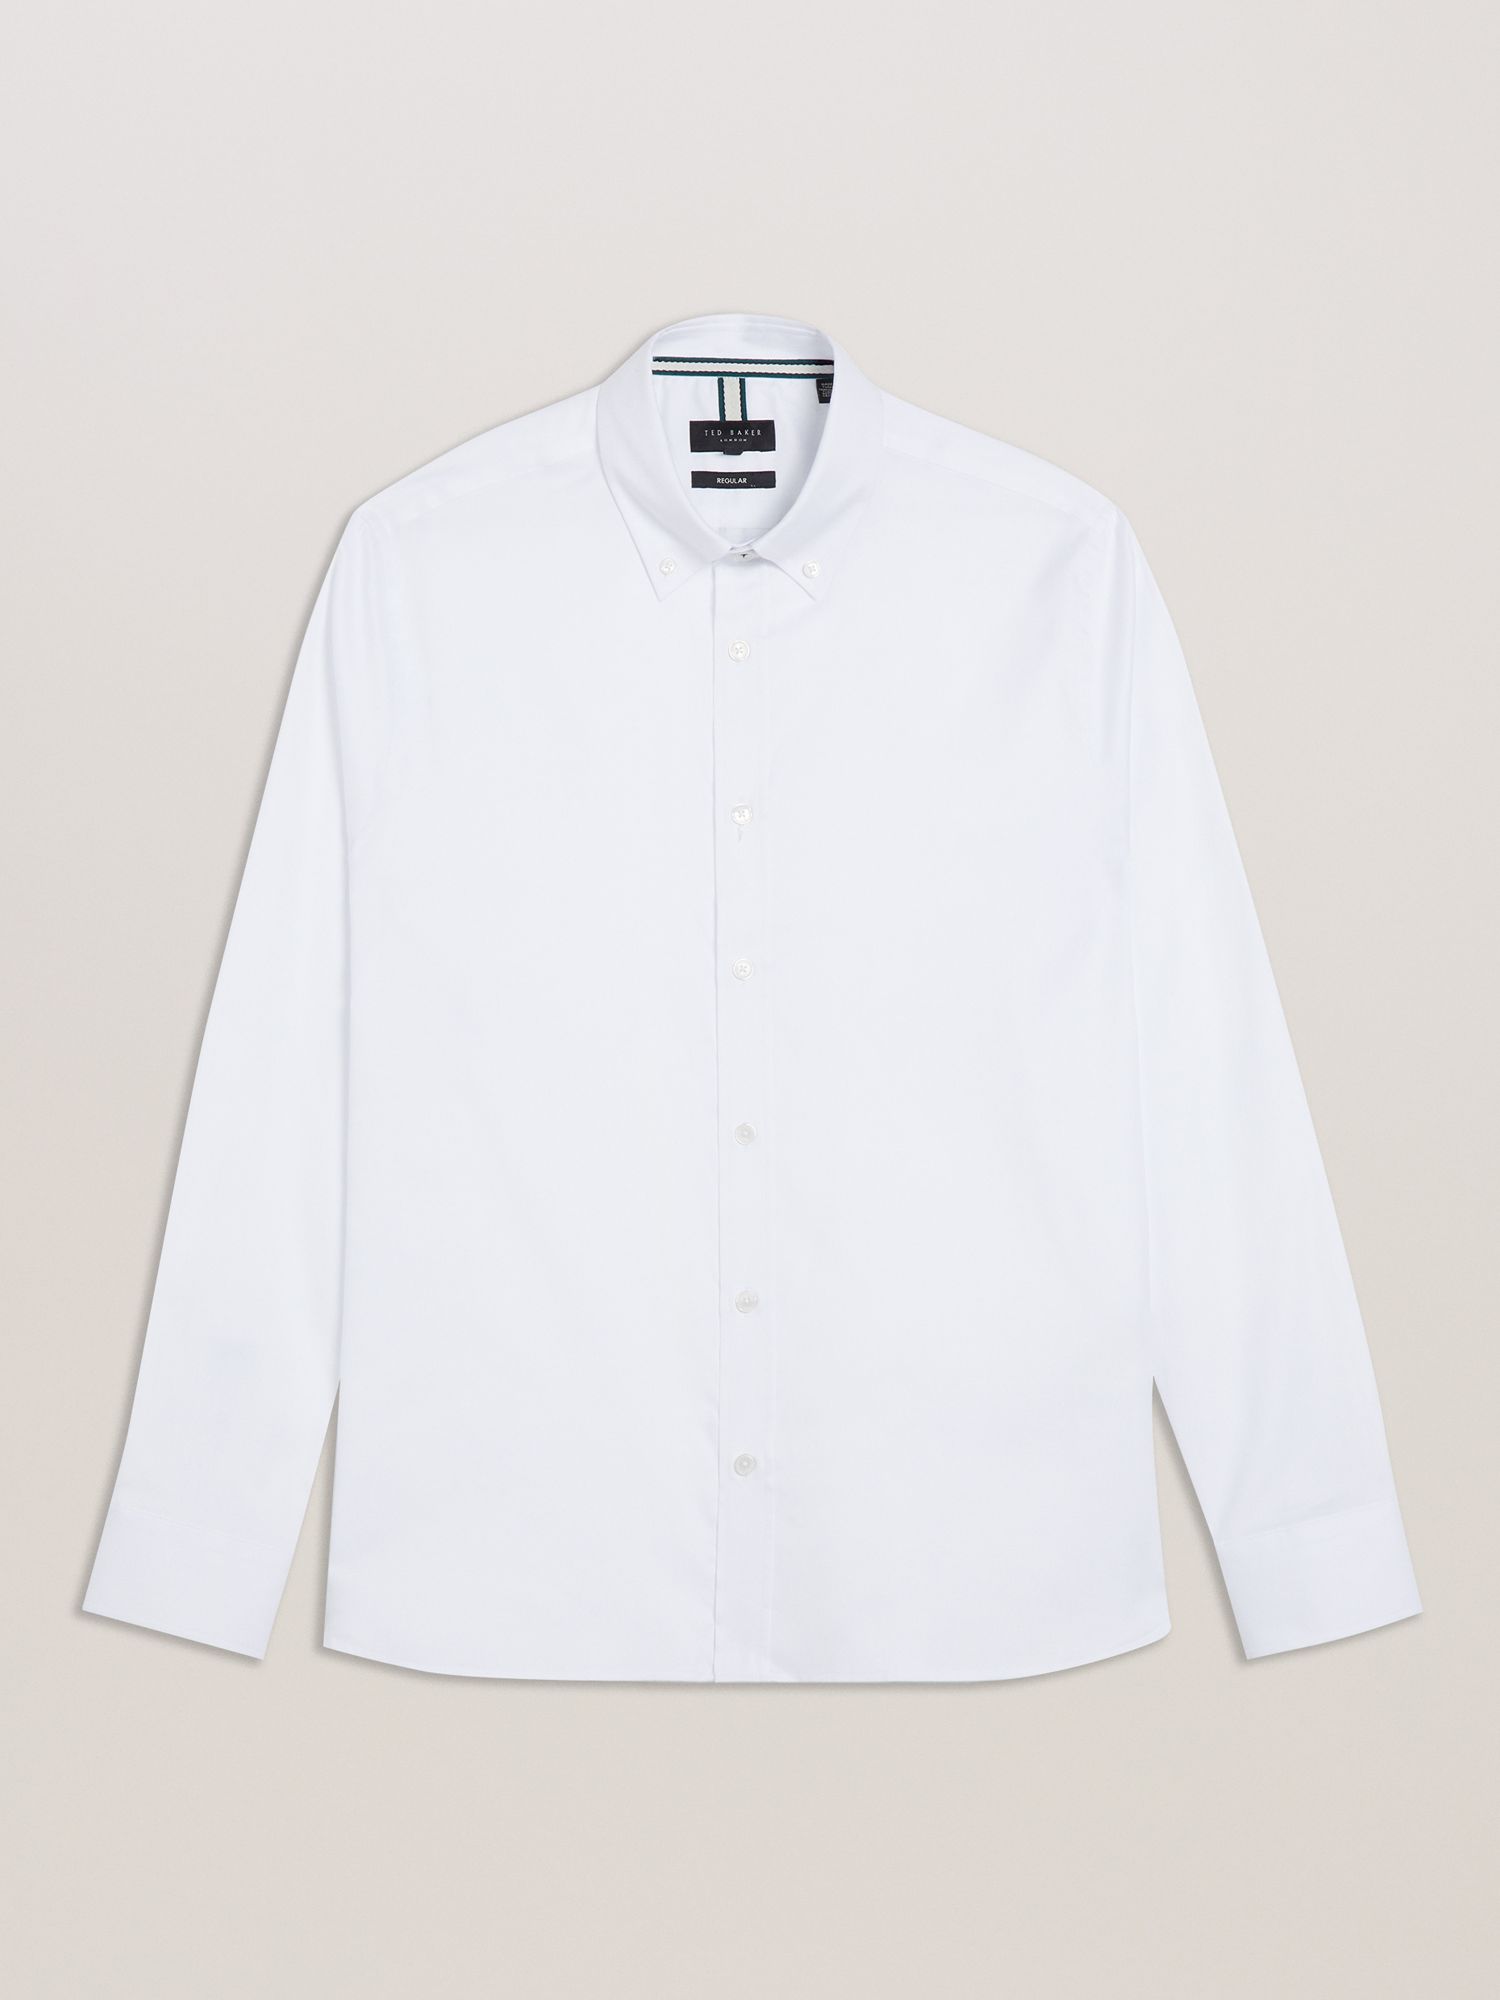 Ted Baker Allardo Regular Premium Oxford Shirt, White, XXL